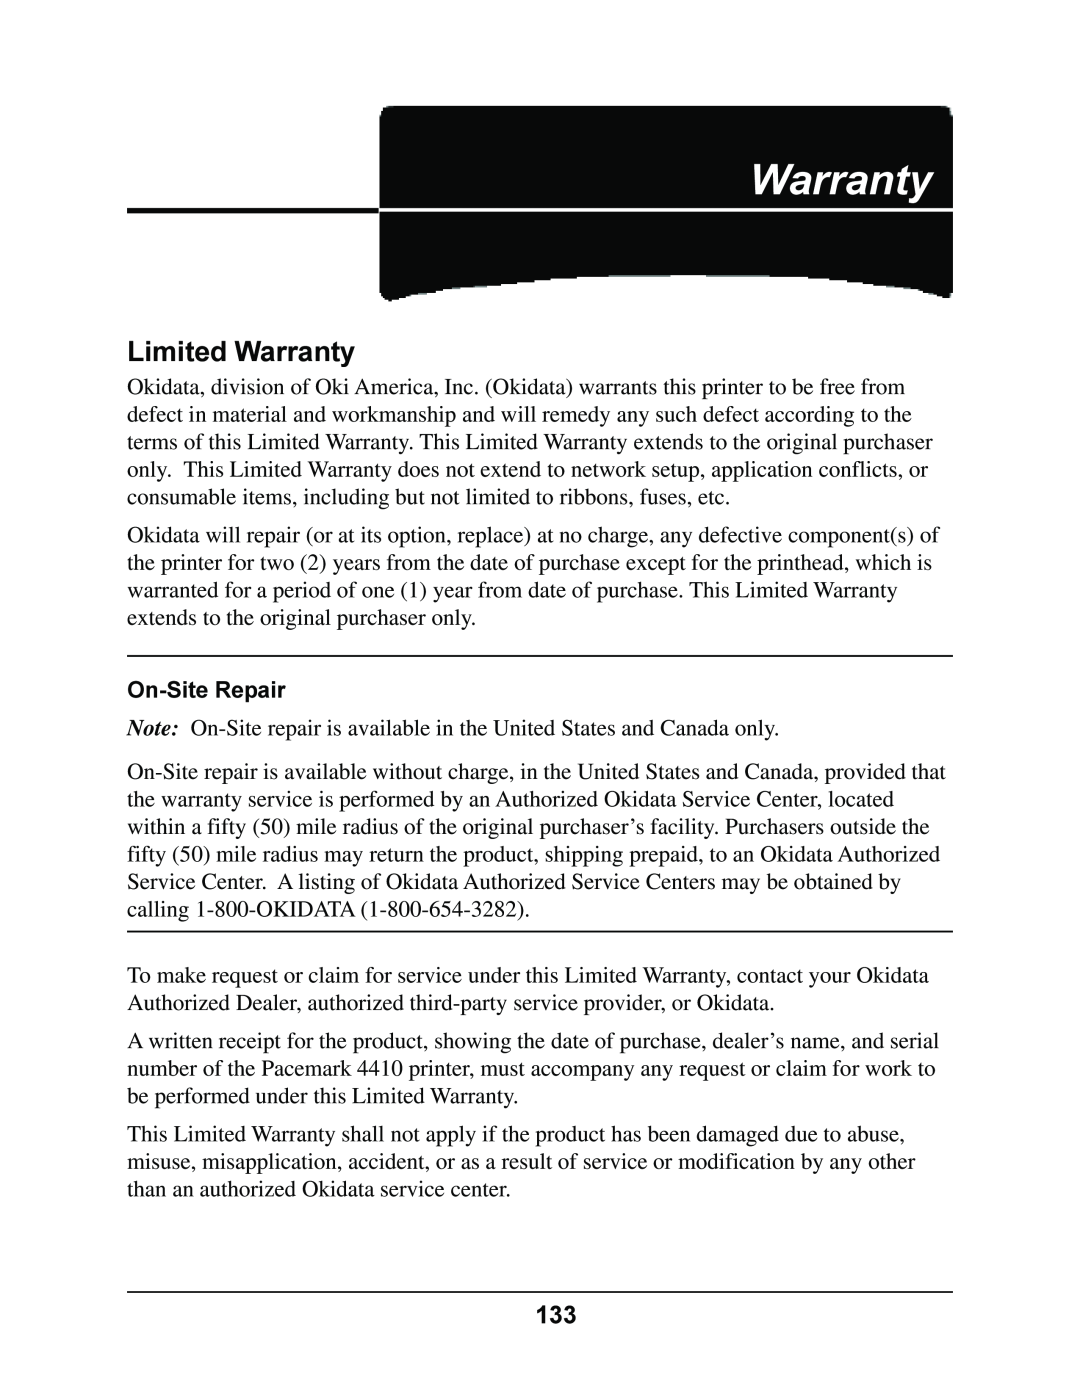 Oki 4410 manual Limited Warranty, On-Site Repair 